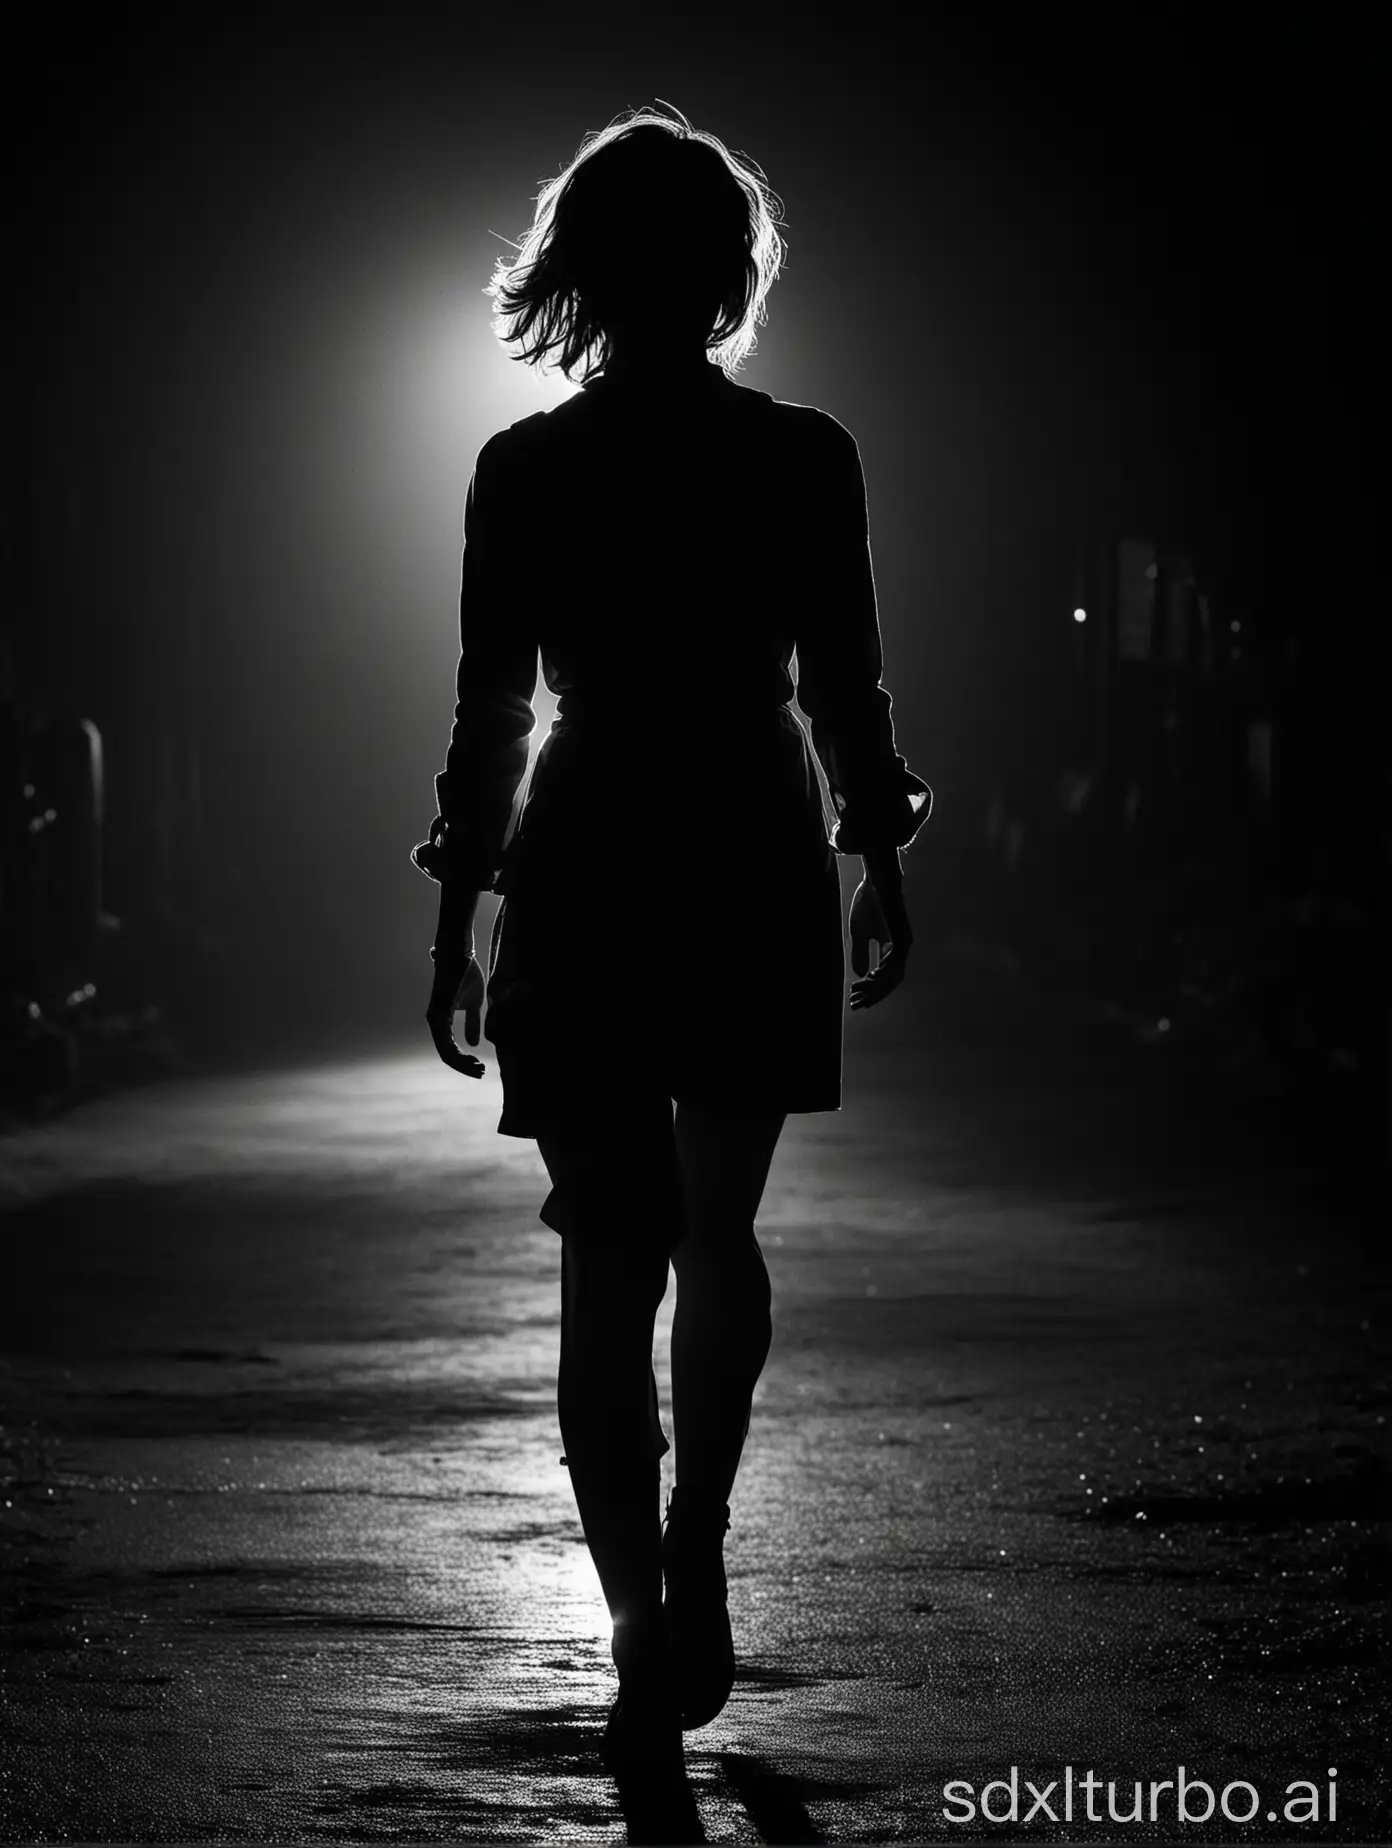 Silhouette-of-Emma-Watson-Walking-in-Dramatic-LowLight-Setting